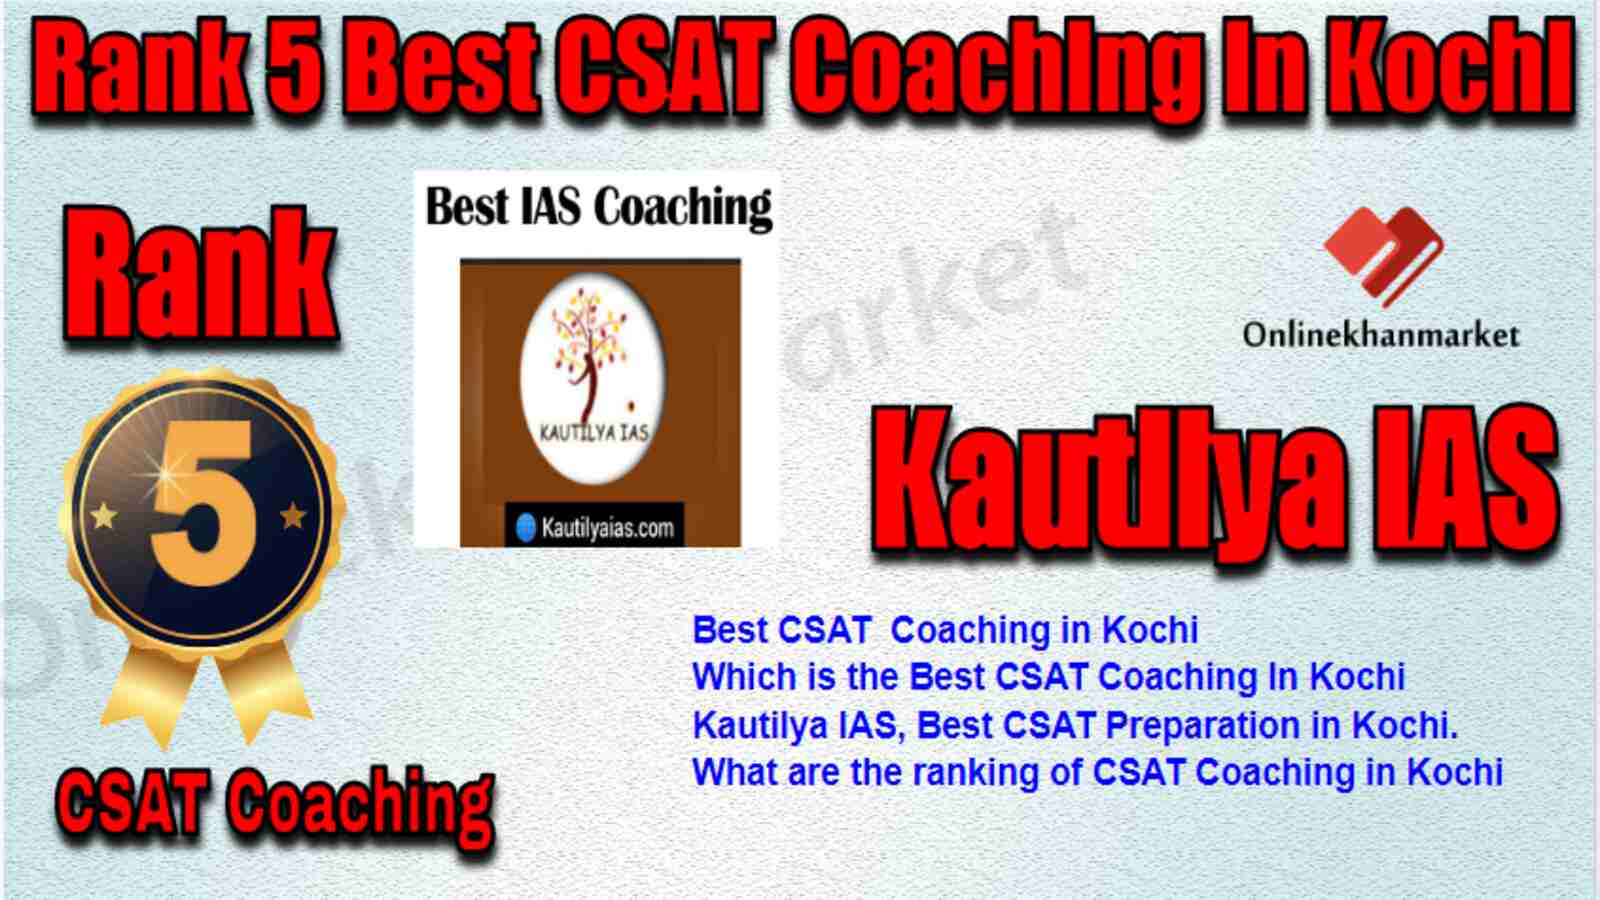 Rank 5 Best CSAT Coaching in Kochi